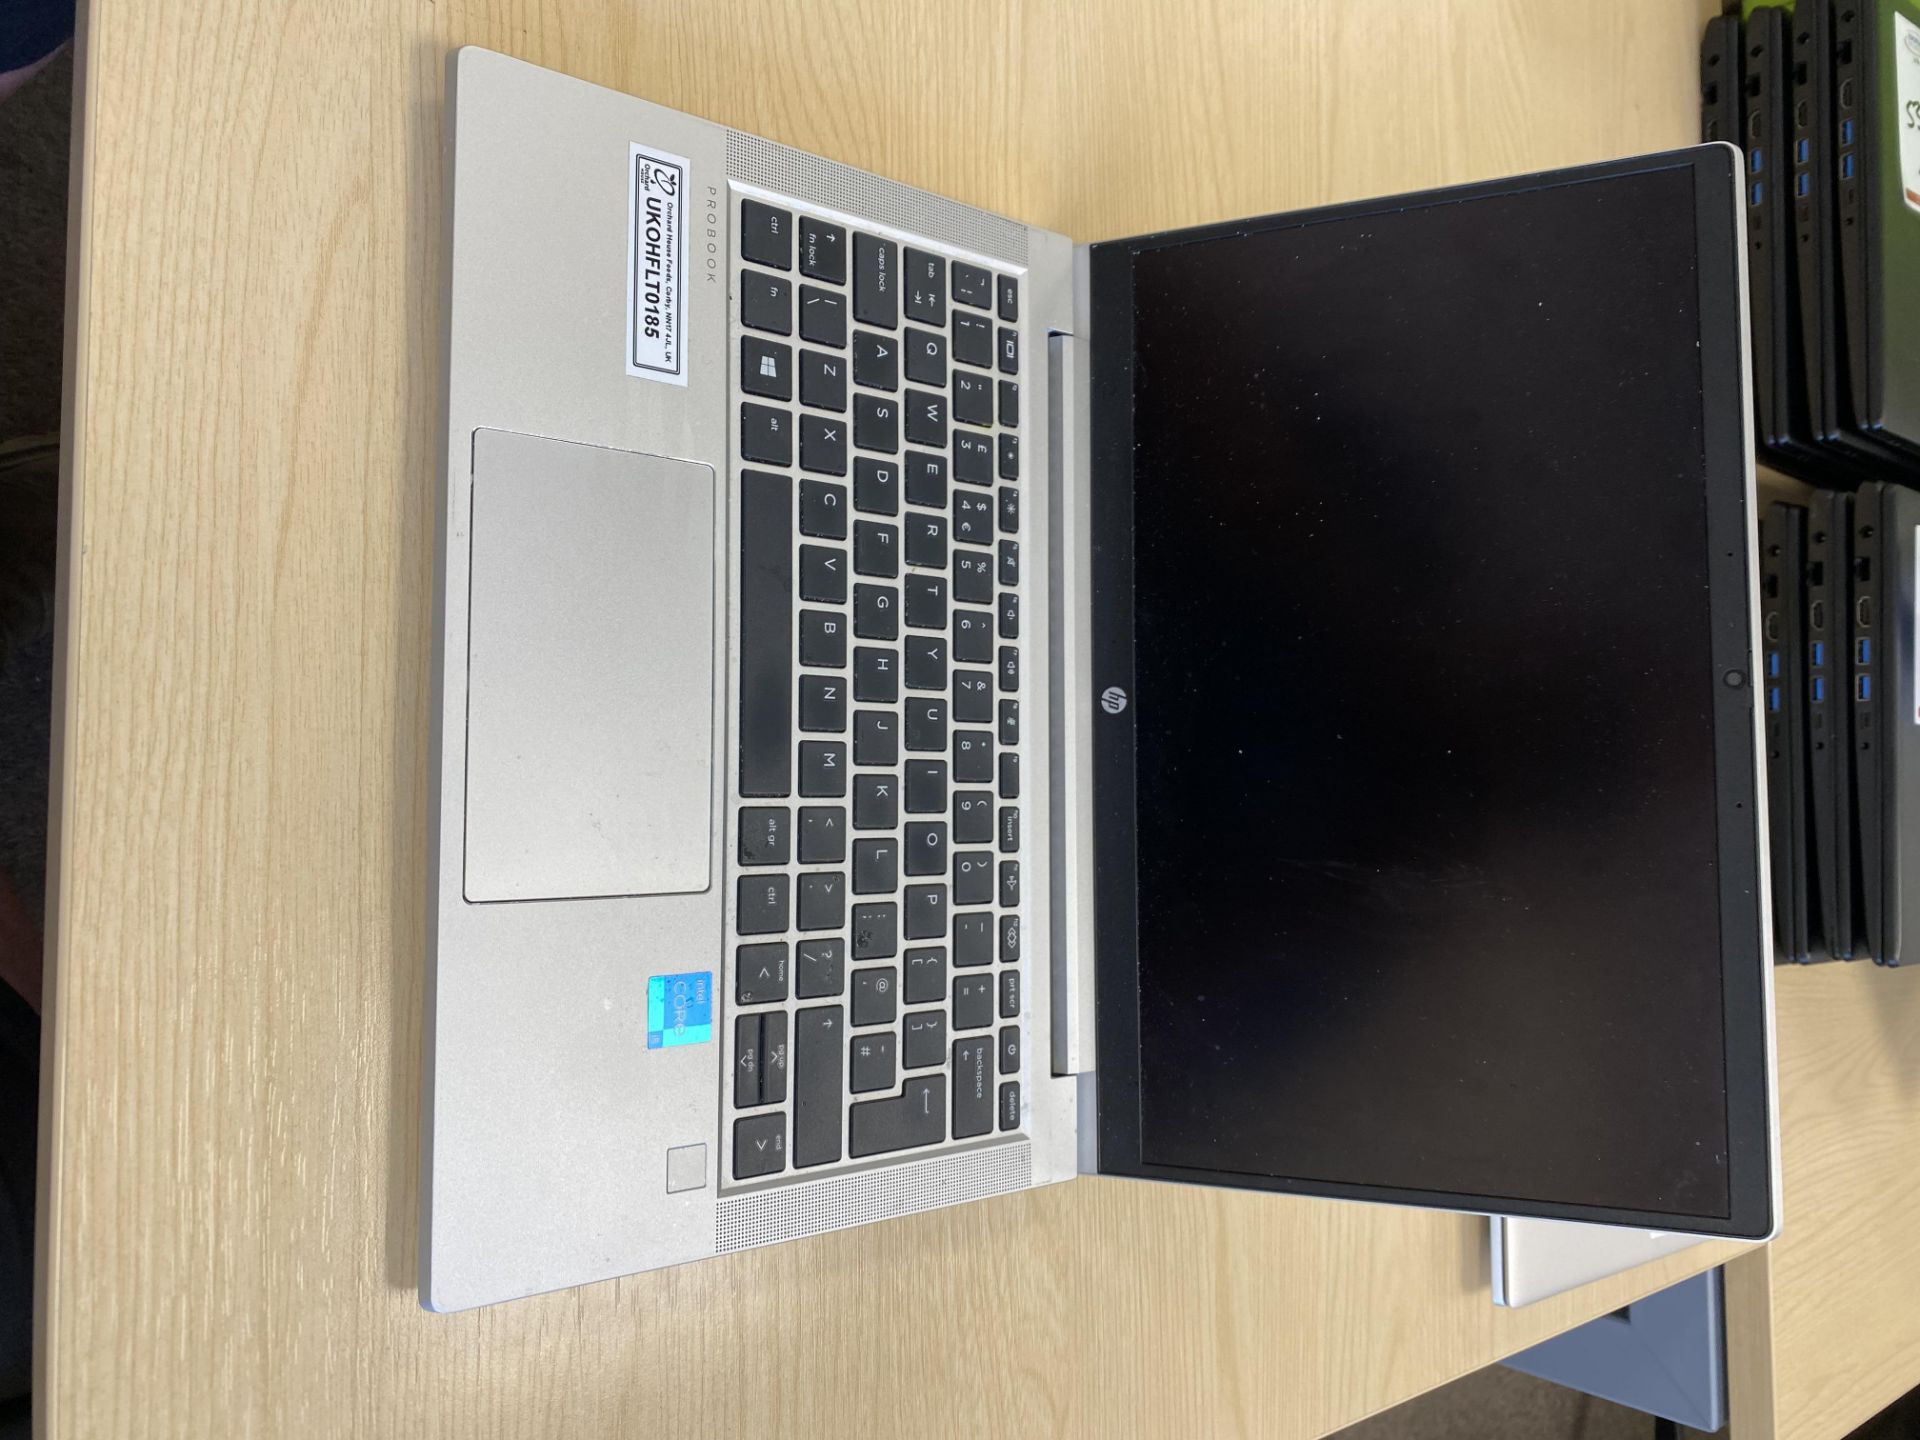 Hewlett Packard HP ProBook 430GB laptop with Intel I5 processor